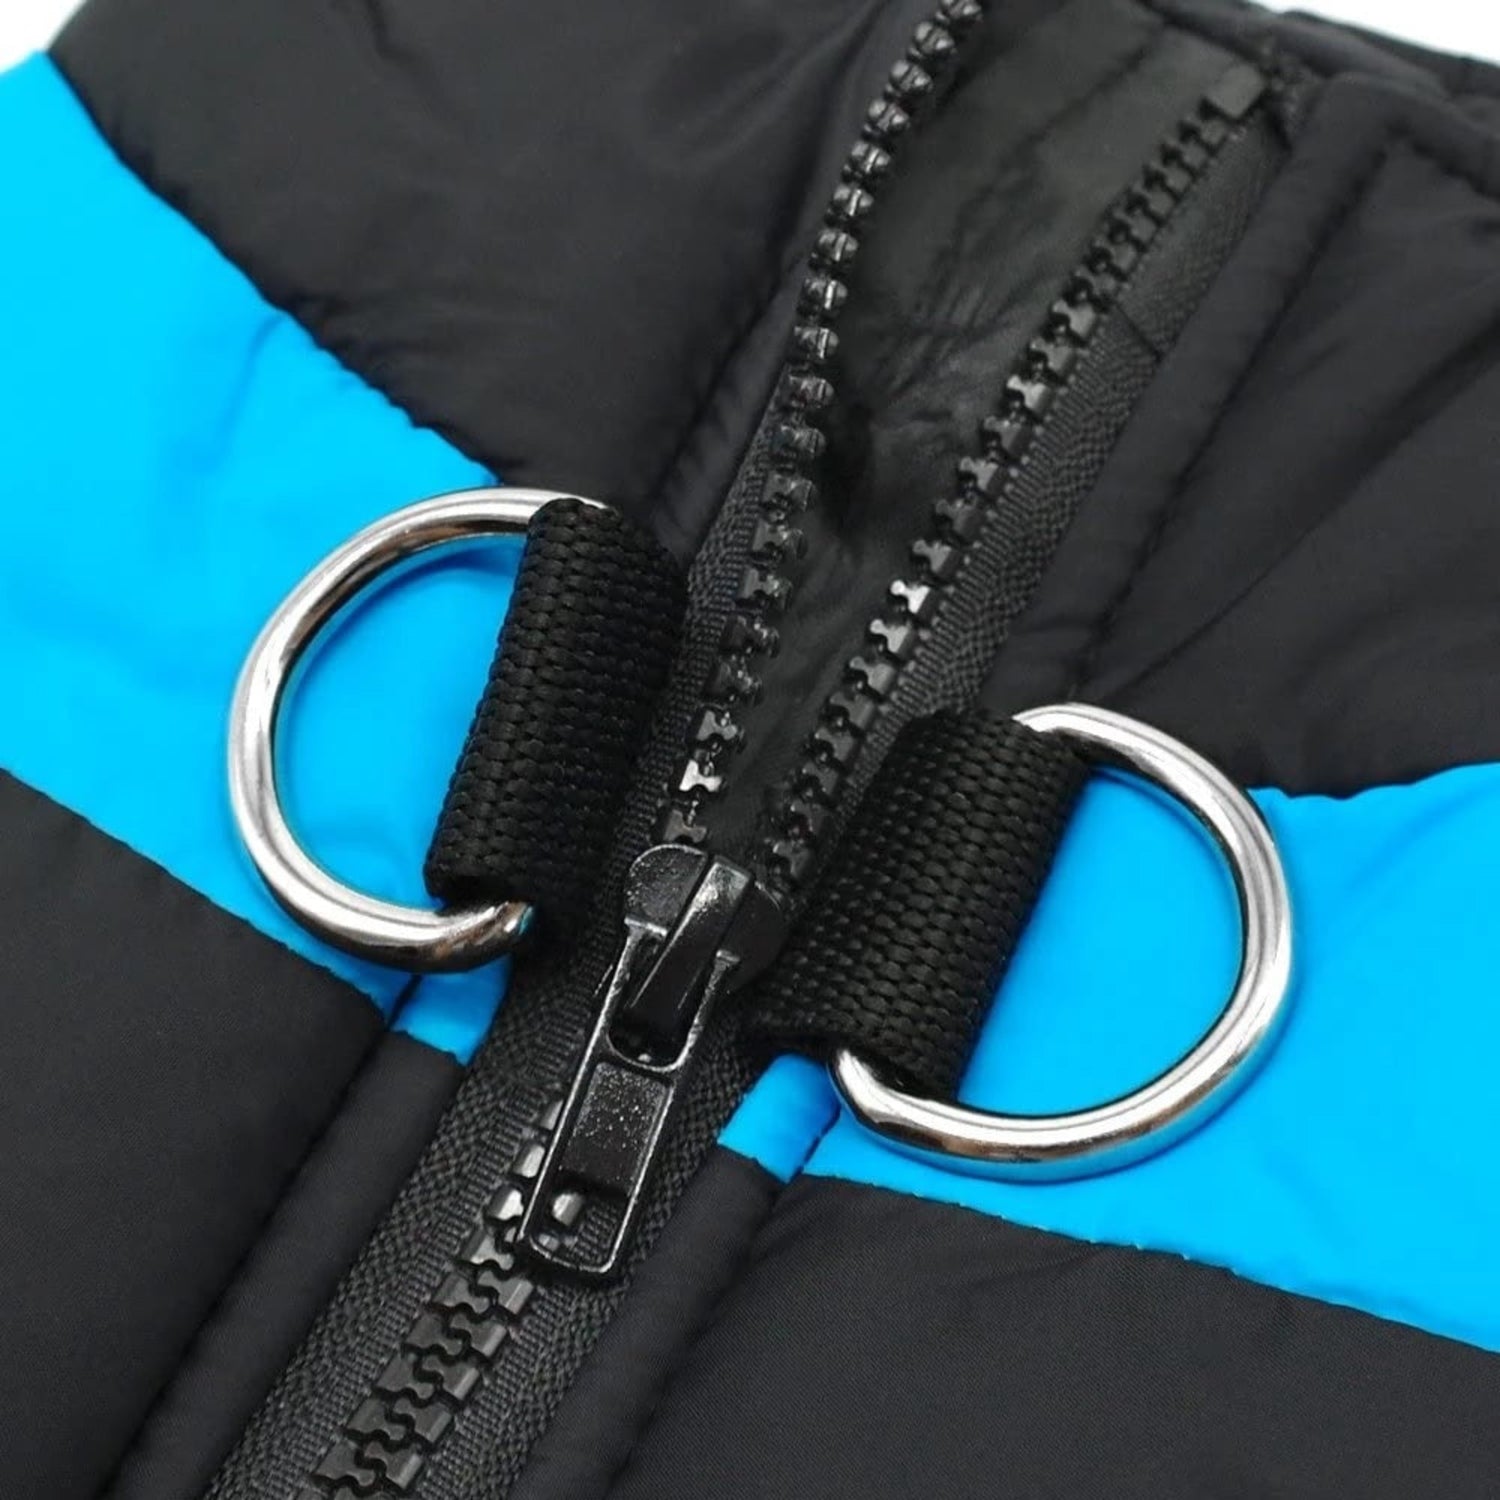 Waterproof Dog Winter Jacket/Harness - Pawzopaws